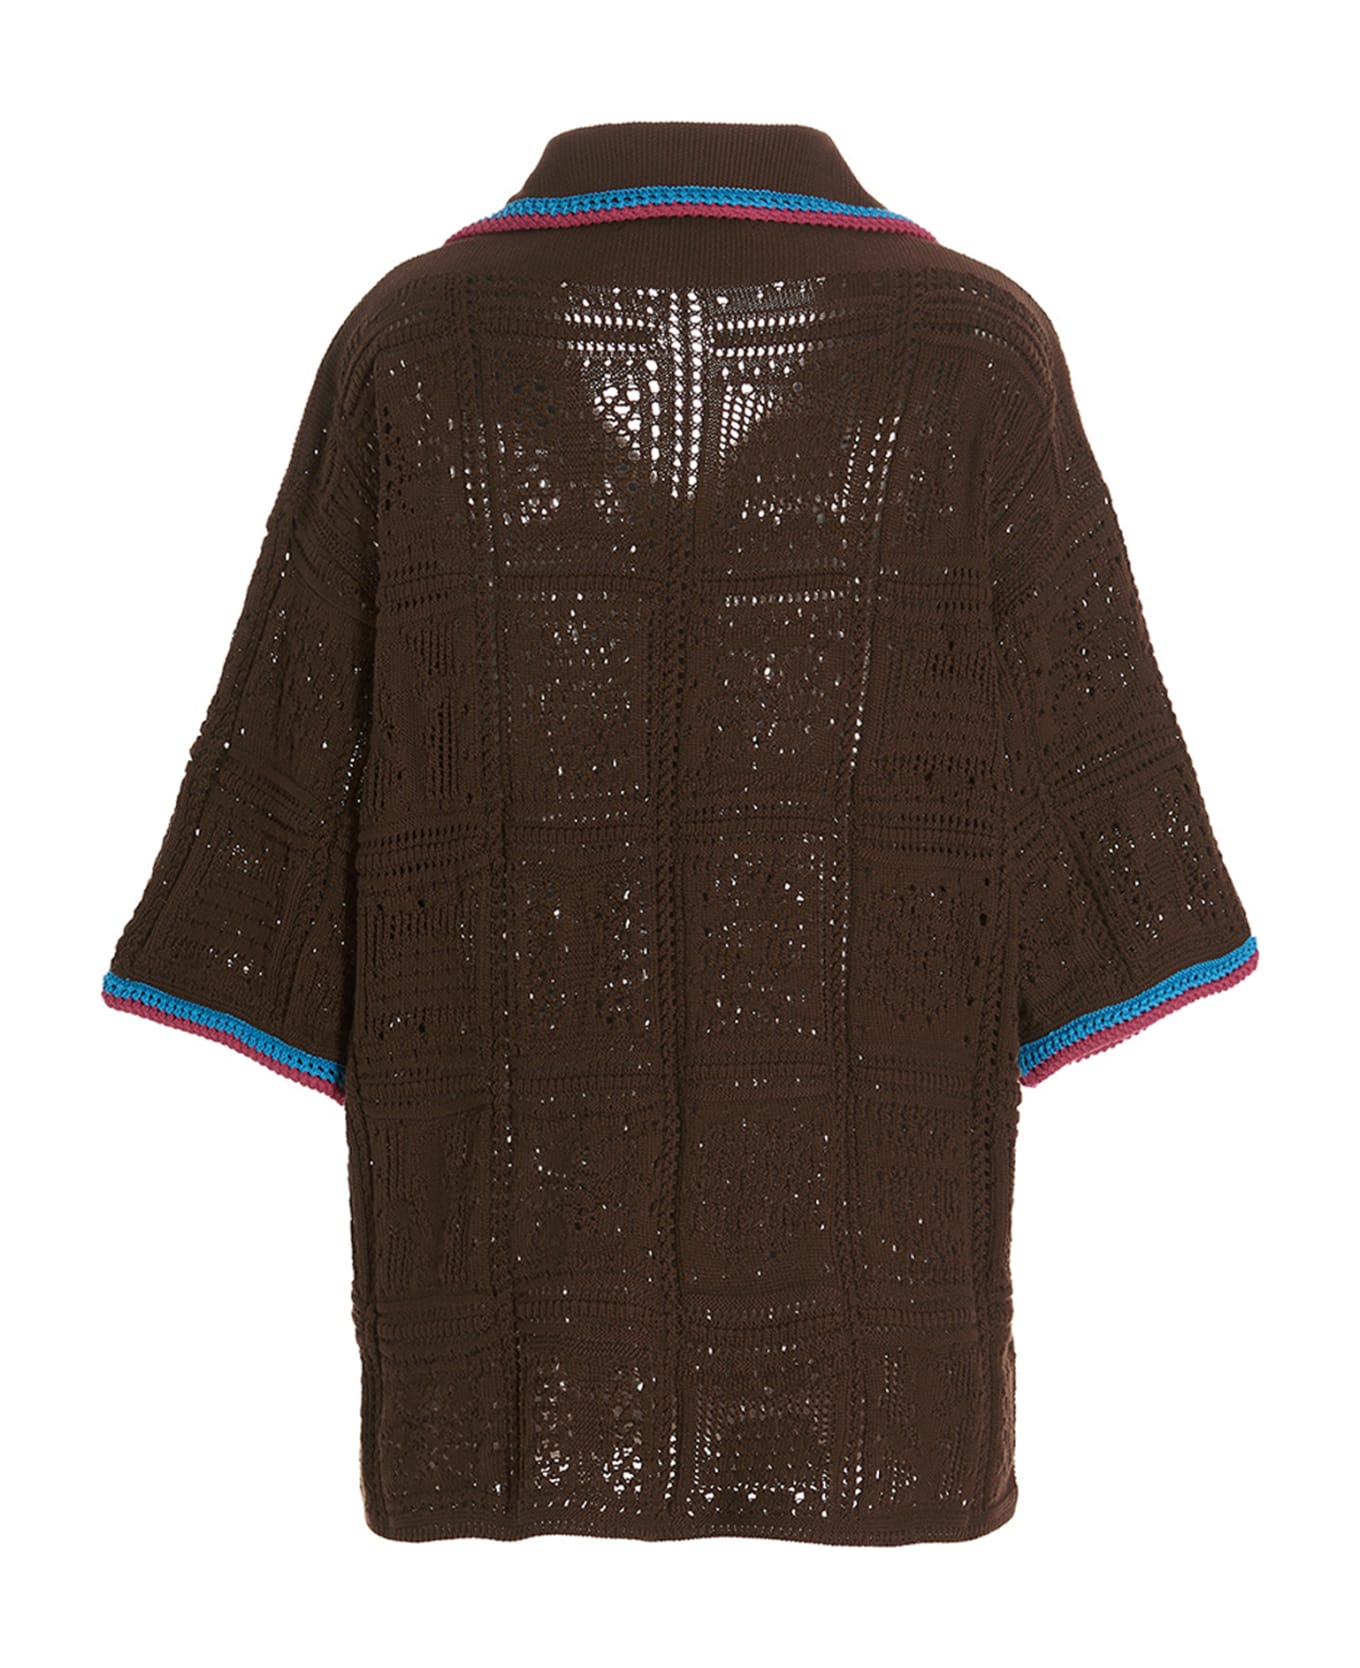 Avril8790 Patch Crochet Shirt - Brown シャツ